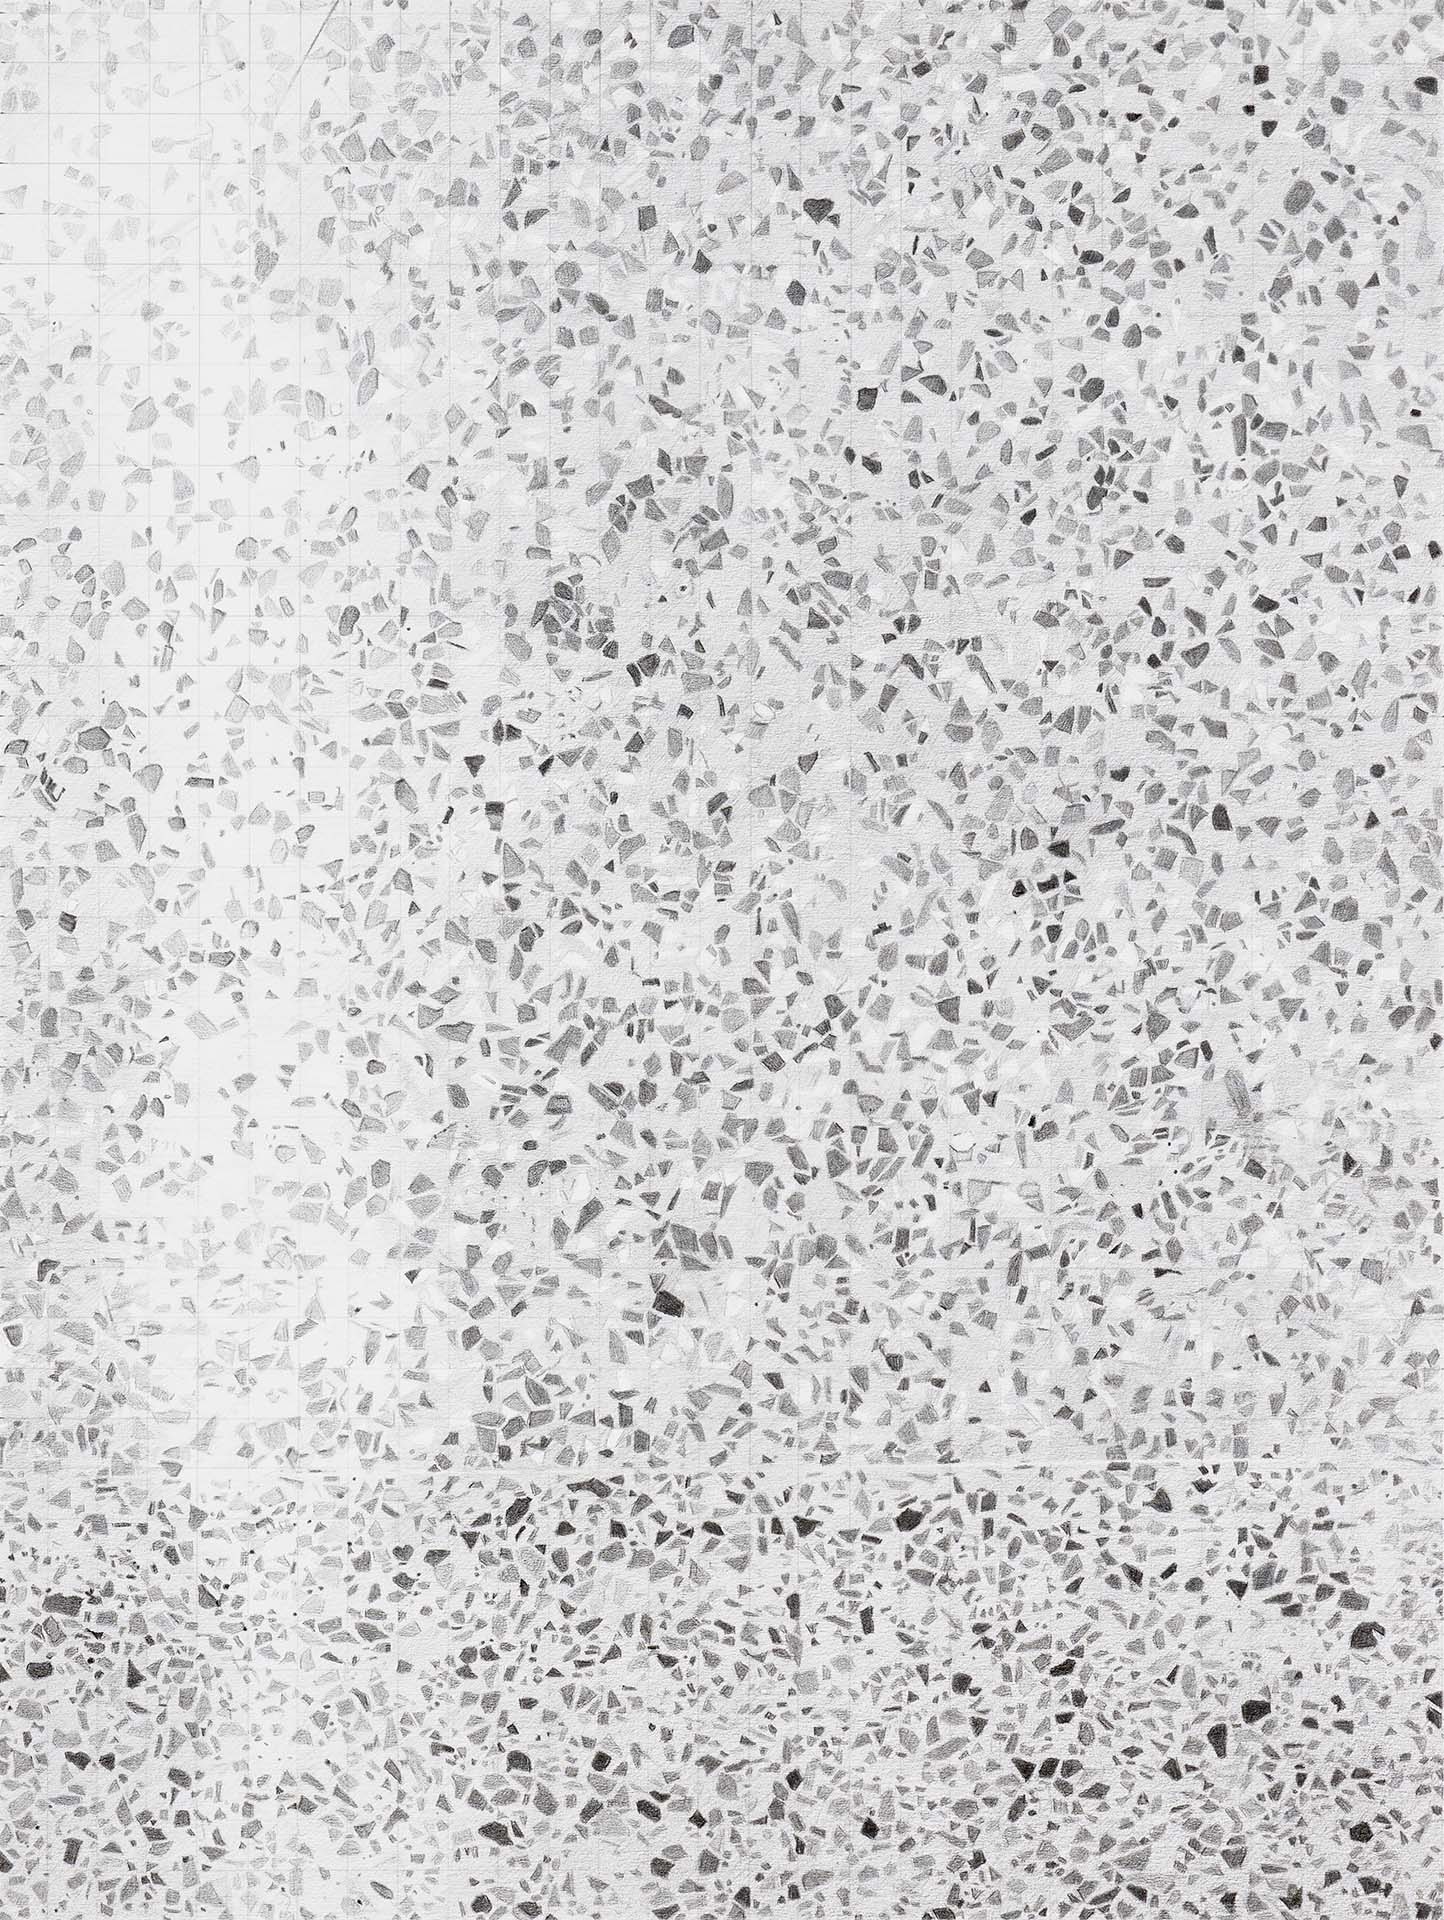  Floor, 2019, graphite on bristol board, 383 x 285mm. Photo: Sam Hartnett 